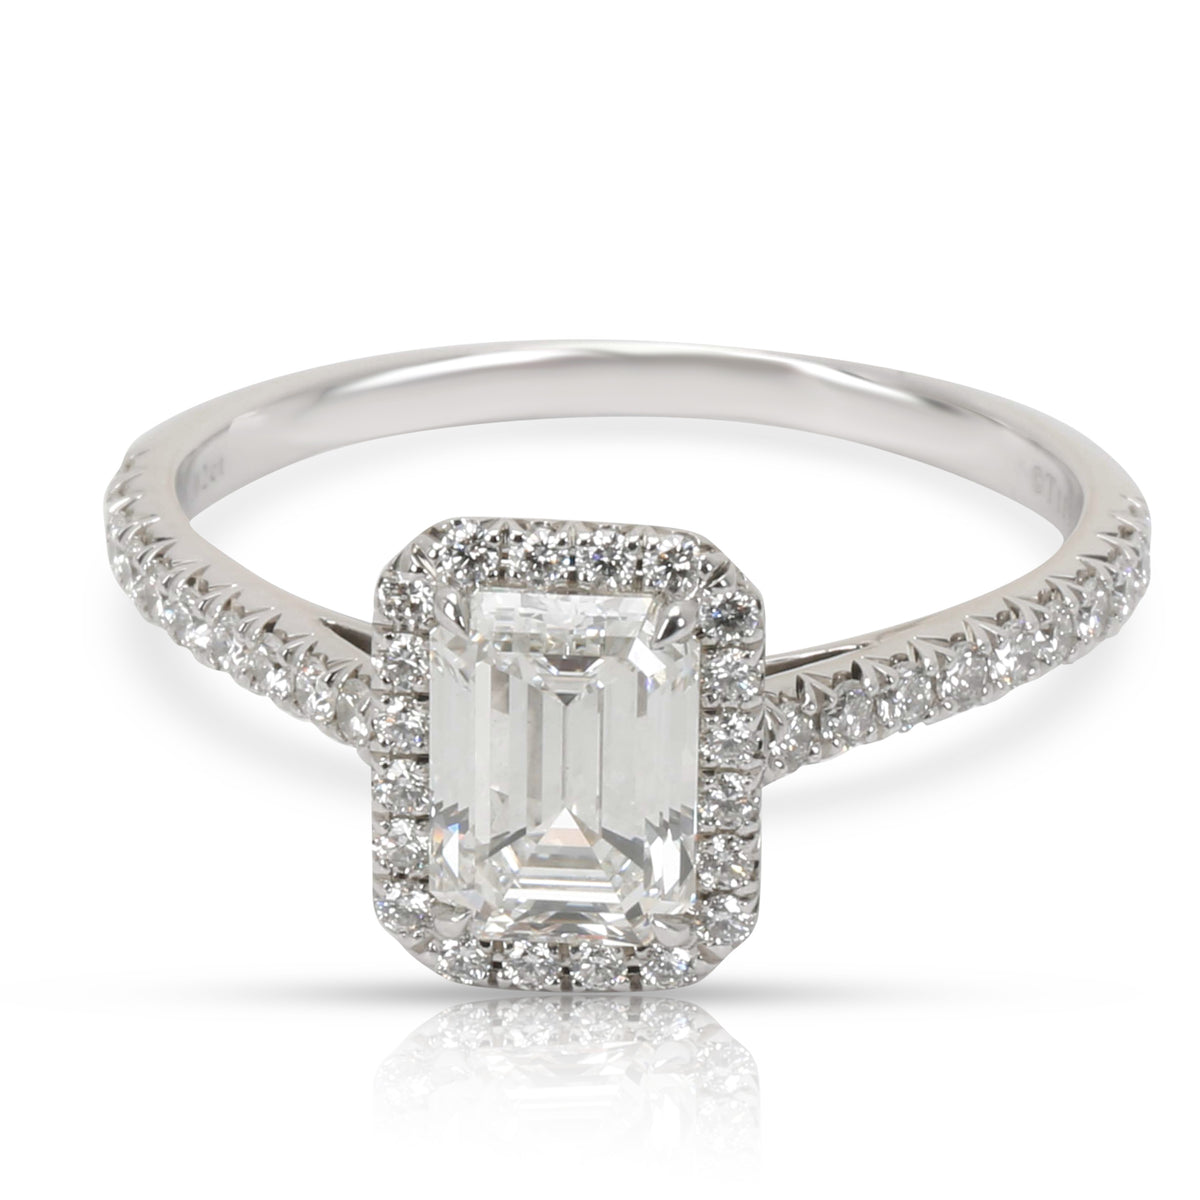 Tiffany & Co. Soleste Emerald Diamond Engagement Ring in  Platinum G VS1 1.29 CT